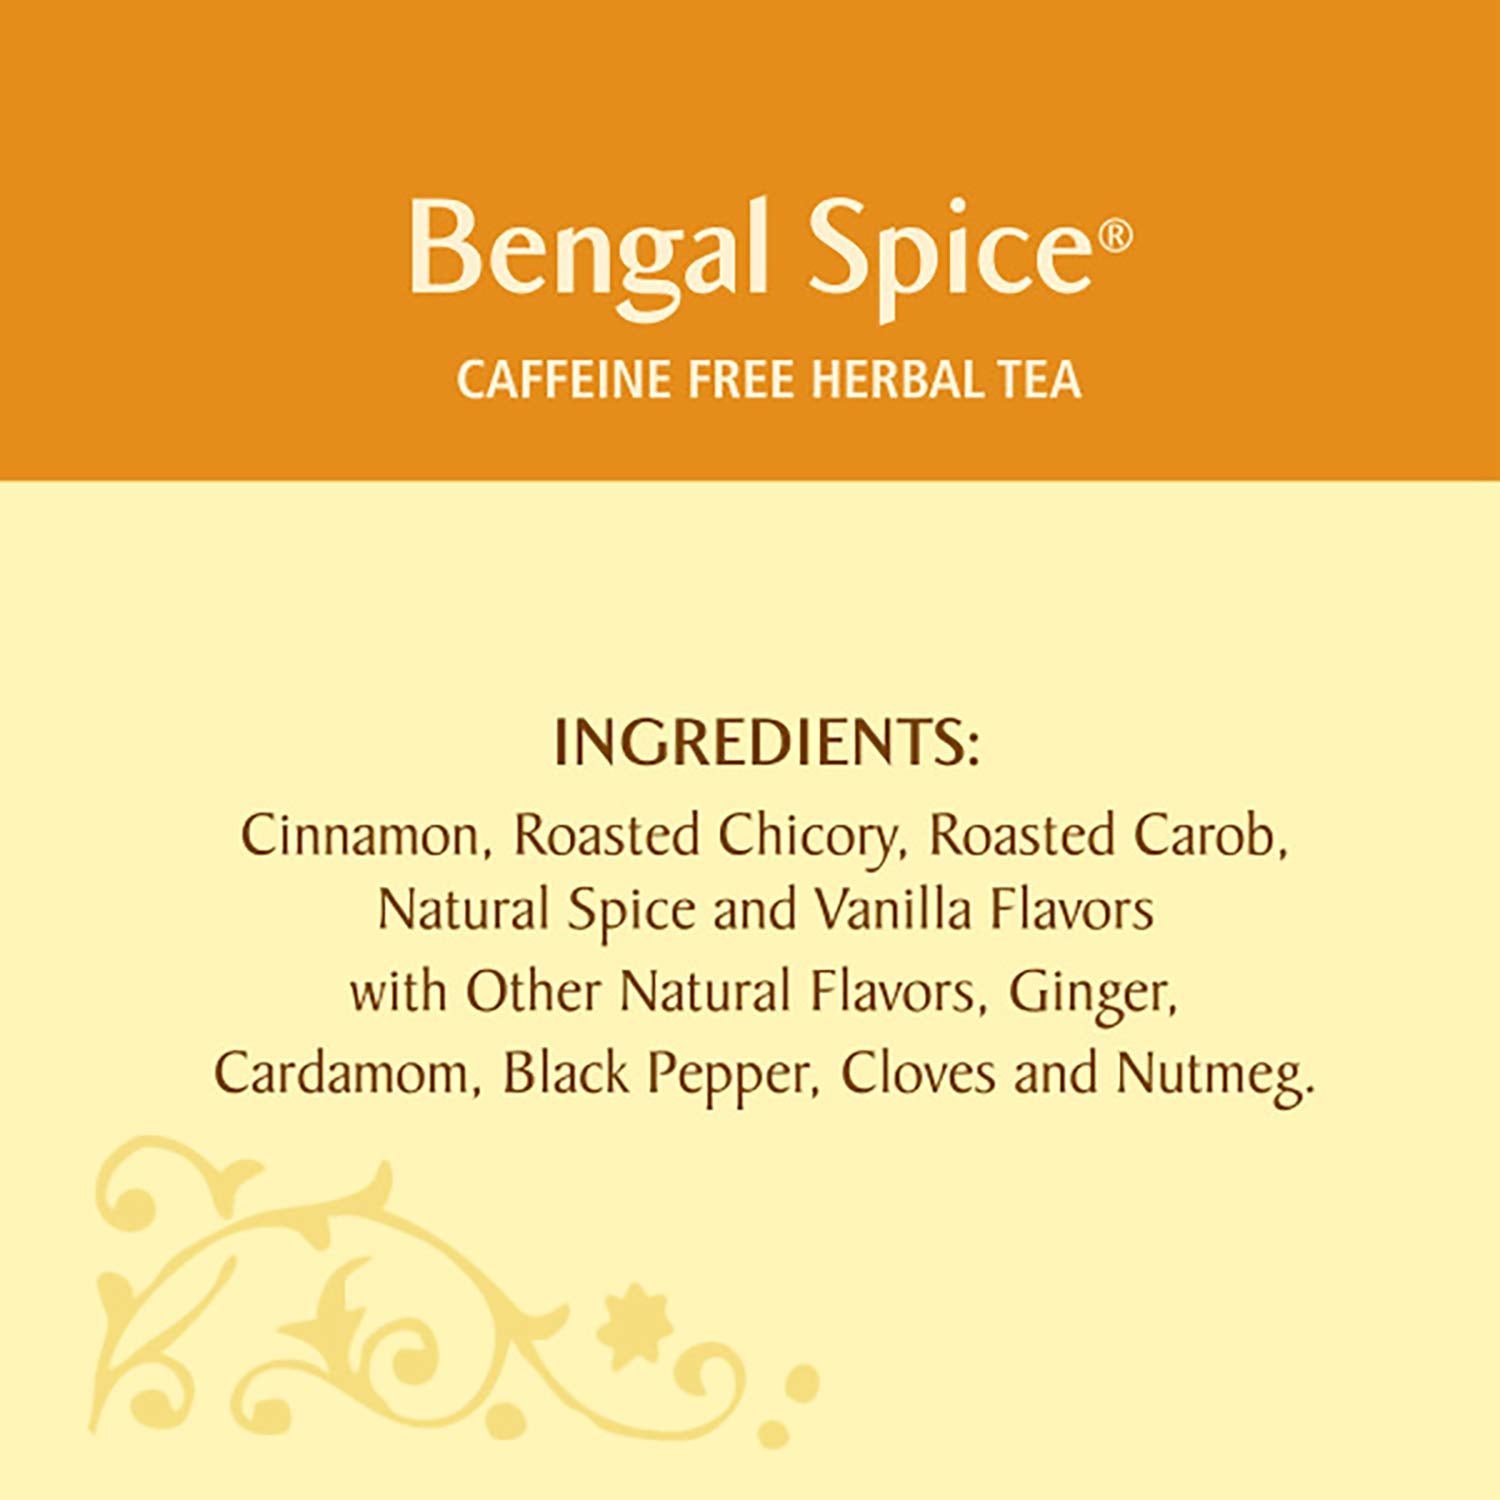 Bengal Spice Herbal Tea 20bags